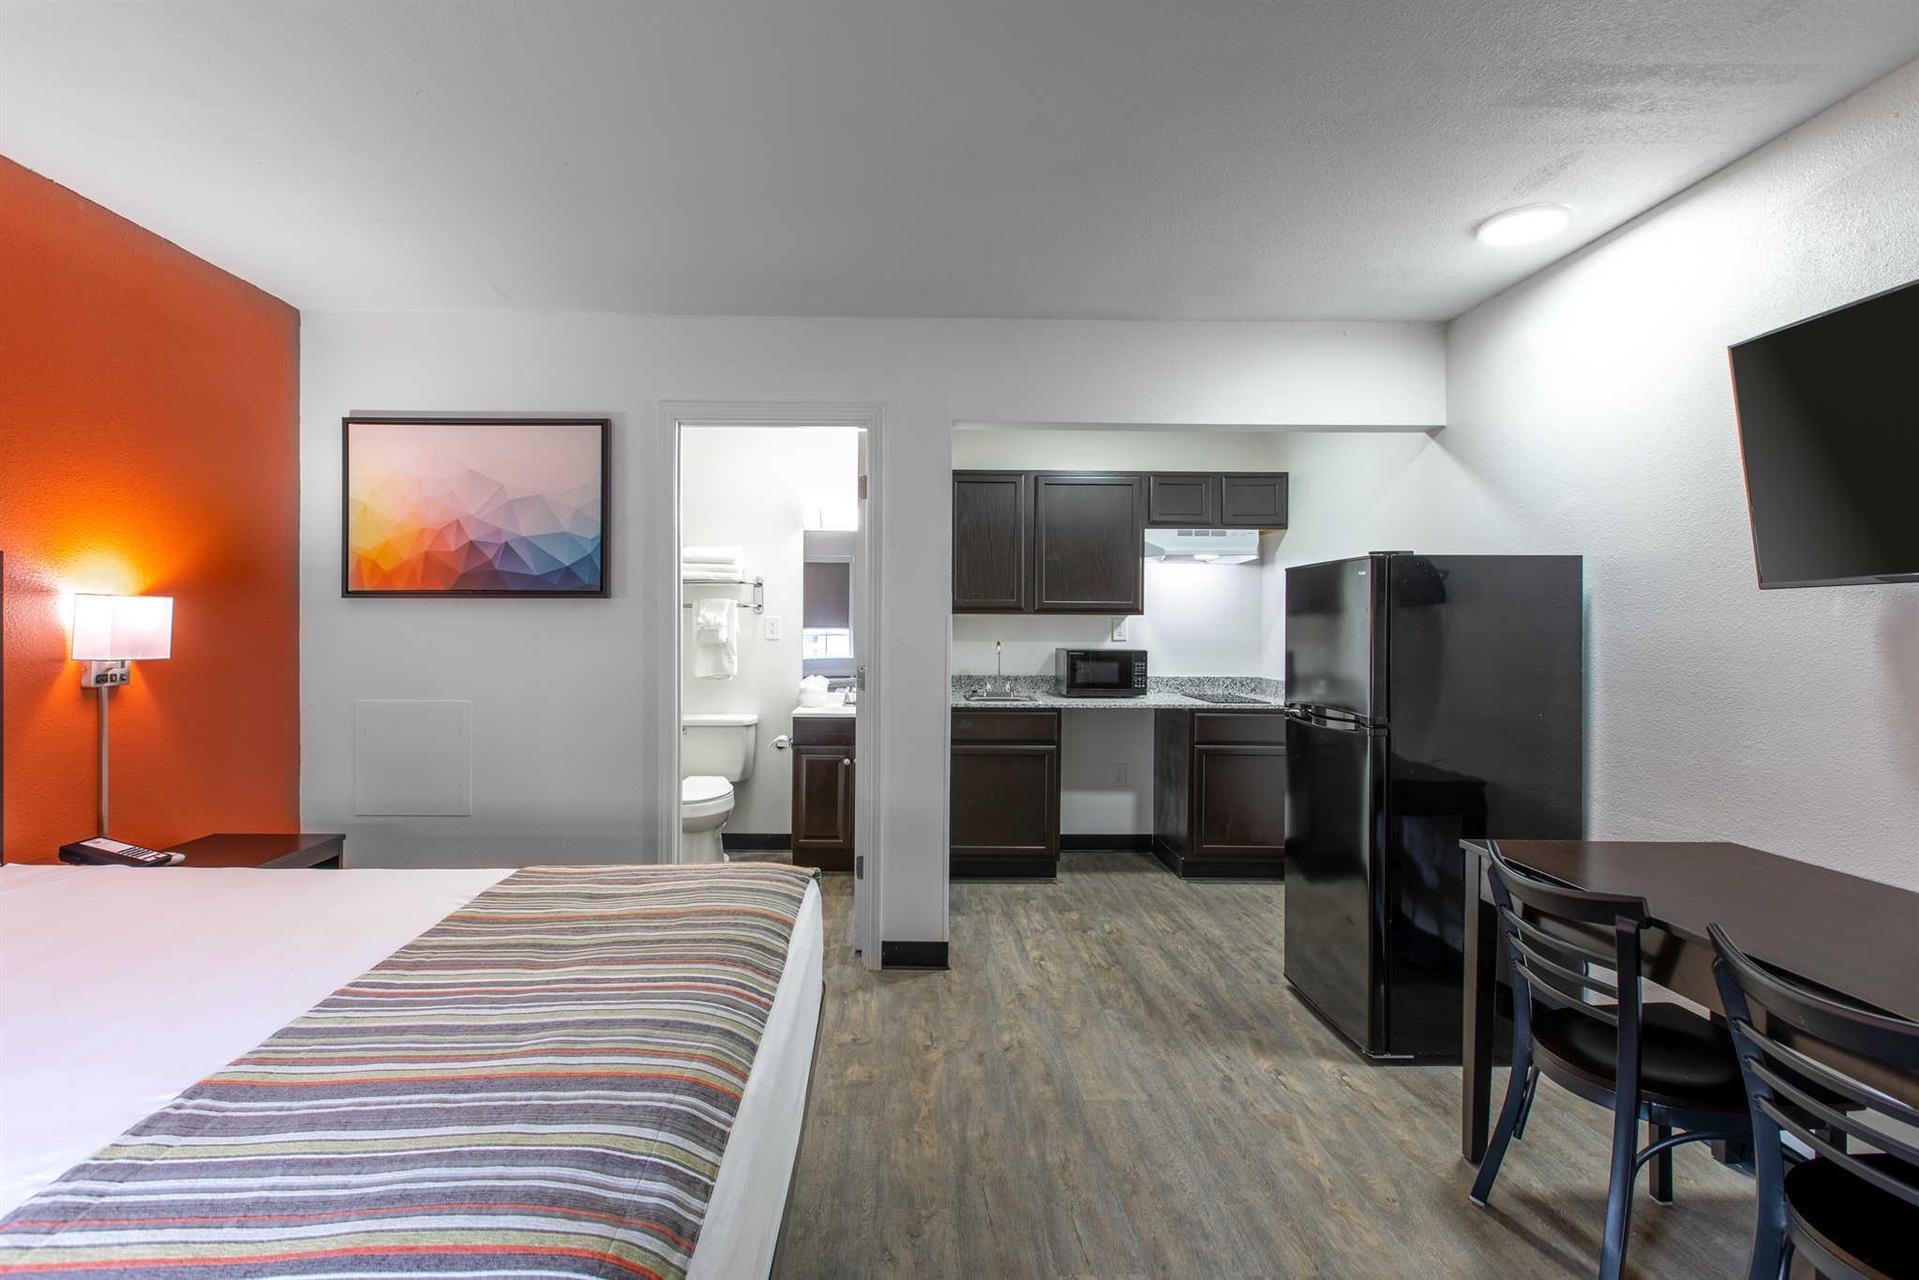 Suburban Extended Stay Hotel - Spartanburg in Spartanburg, SC